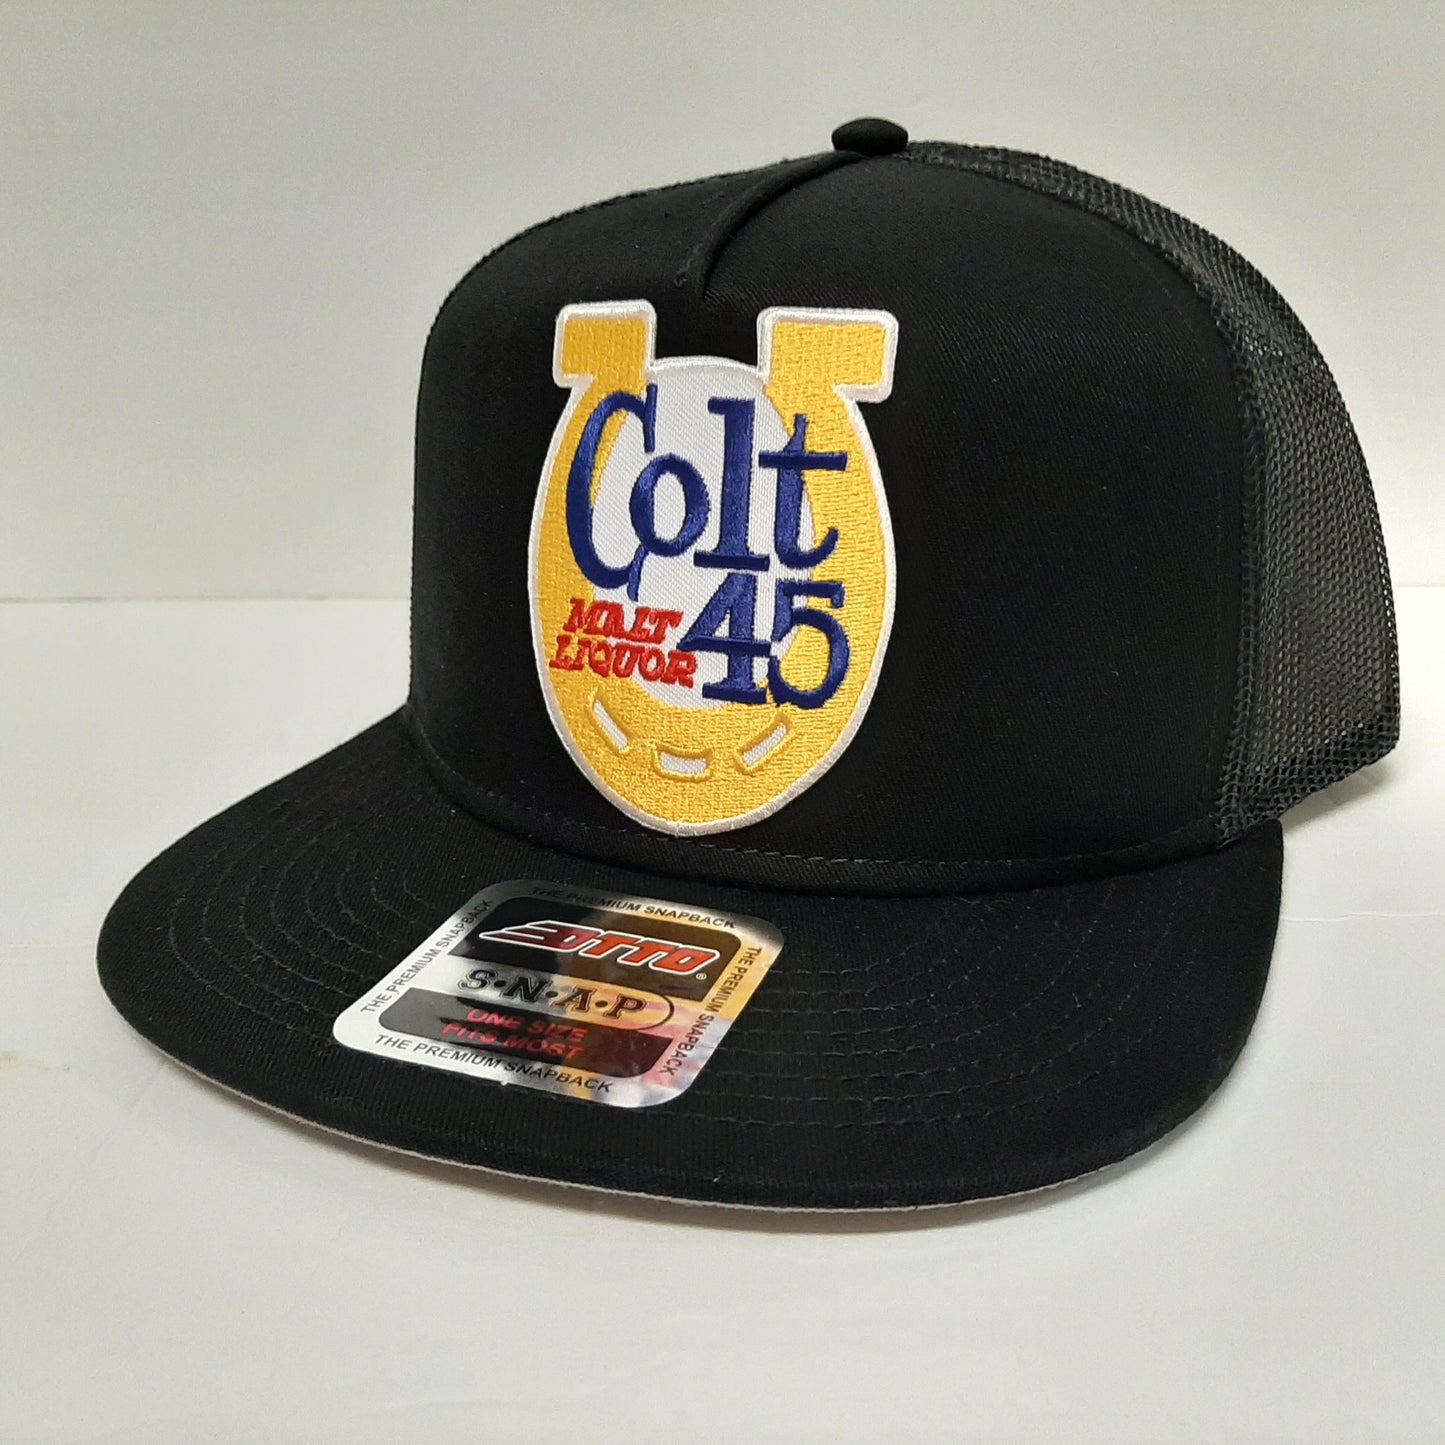 Colt 45 Malt Liquor Beer Embroidered Patch Flat Bill Snapback Mesh Hat Cap OTTO